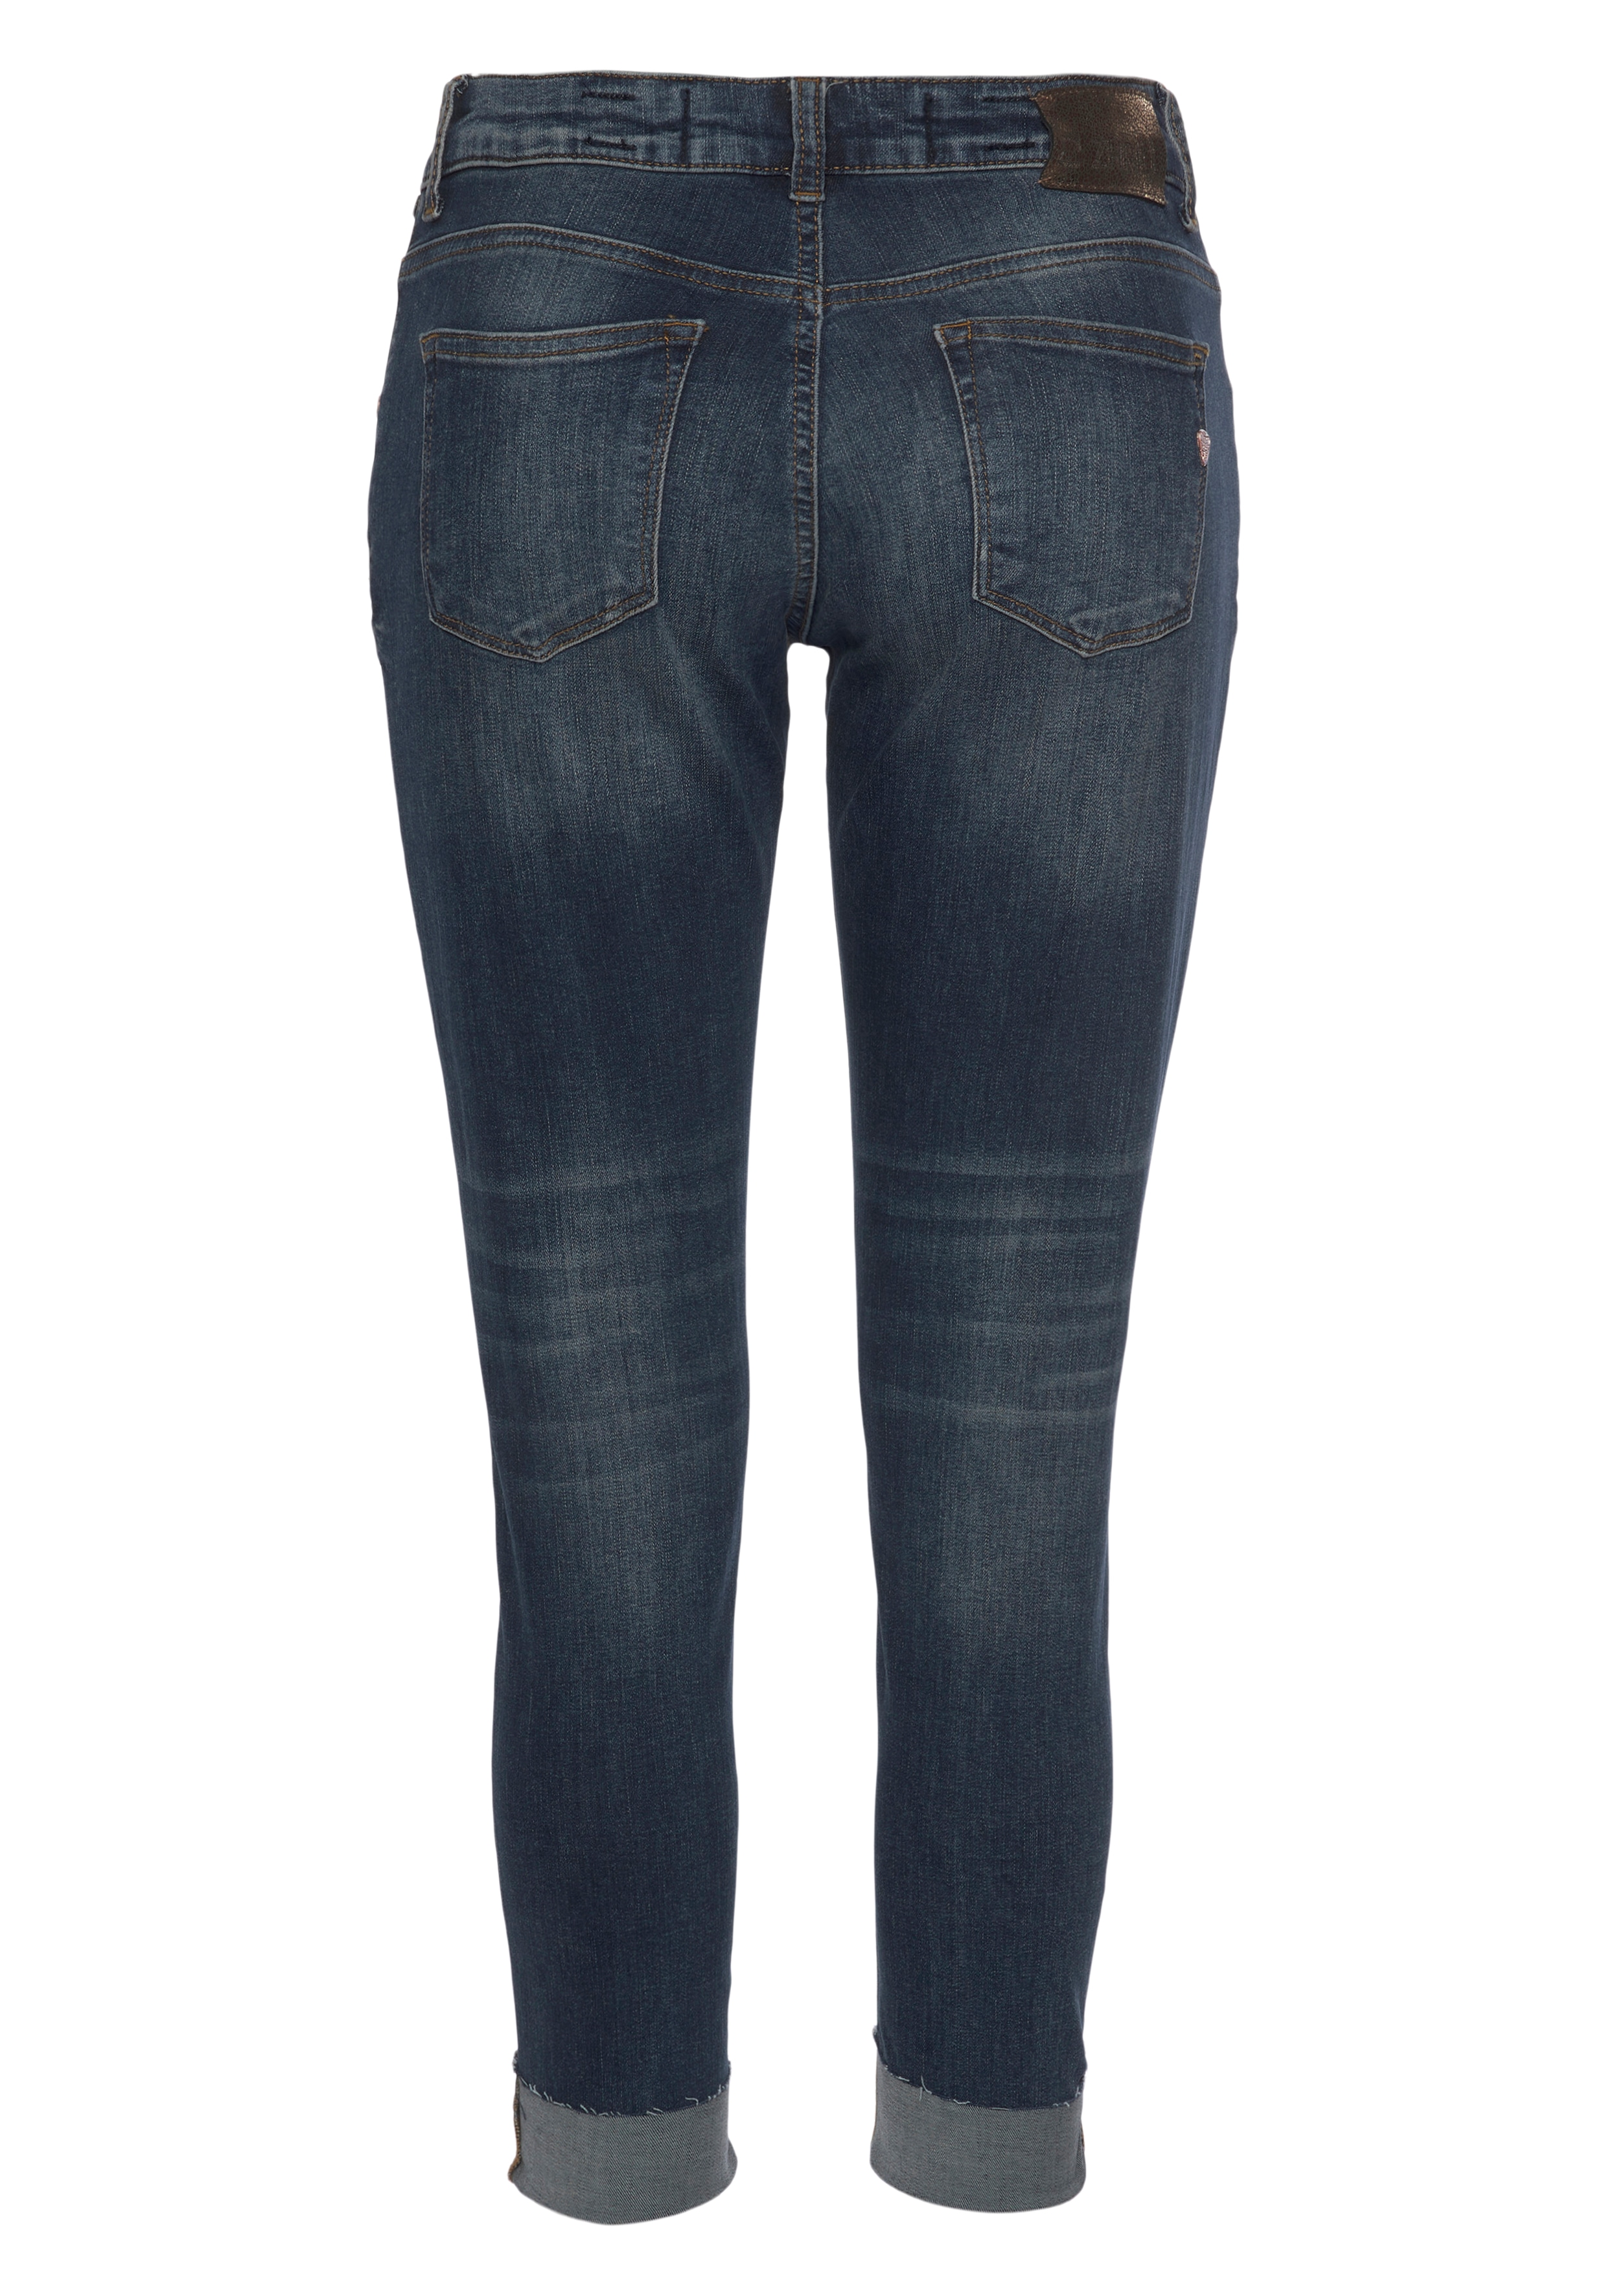 Zhrill Mom-Jeans Skinny Jeans NOVA Blue angenehmer Tragekomfort günstig online kaufen